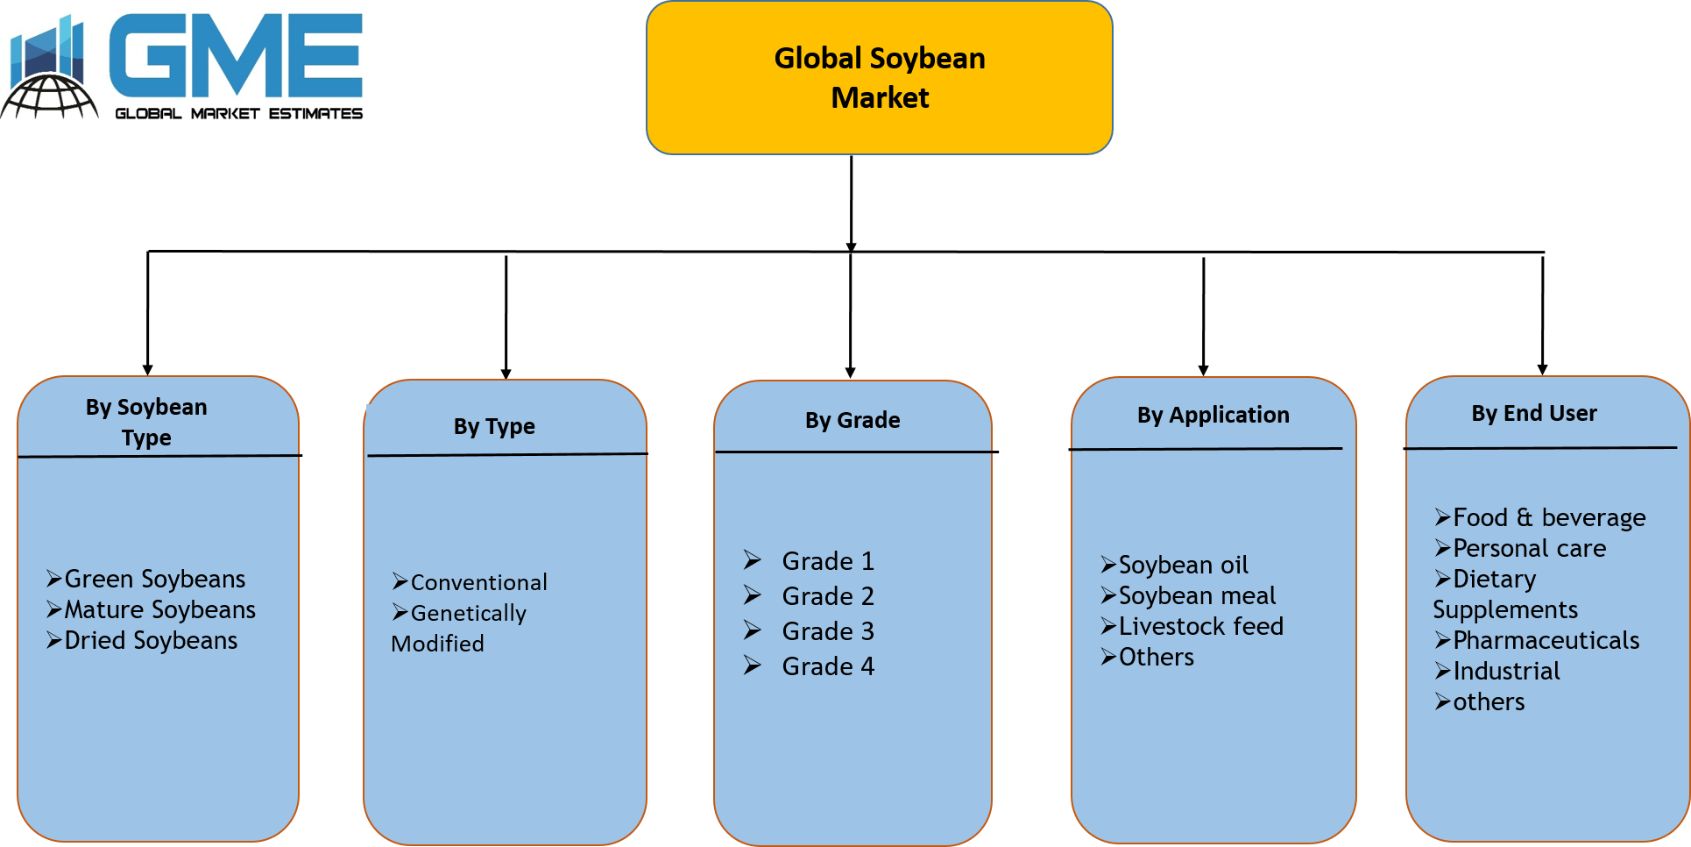 Global Soybean Market Segmentation